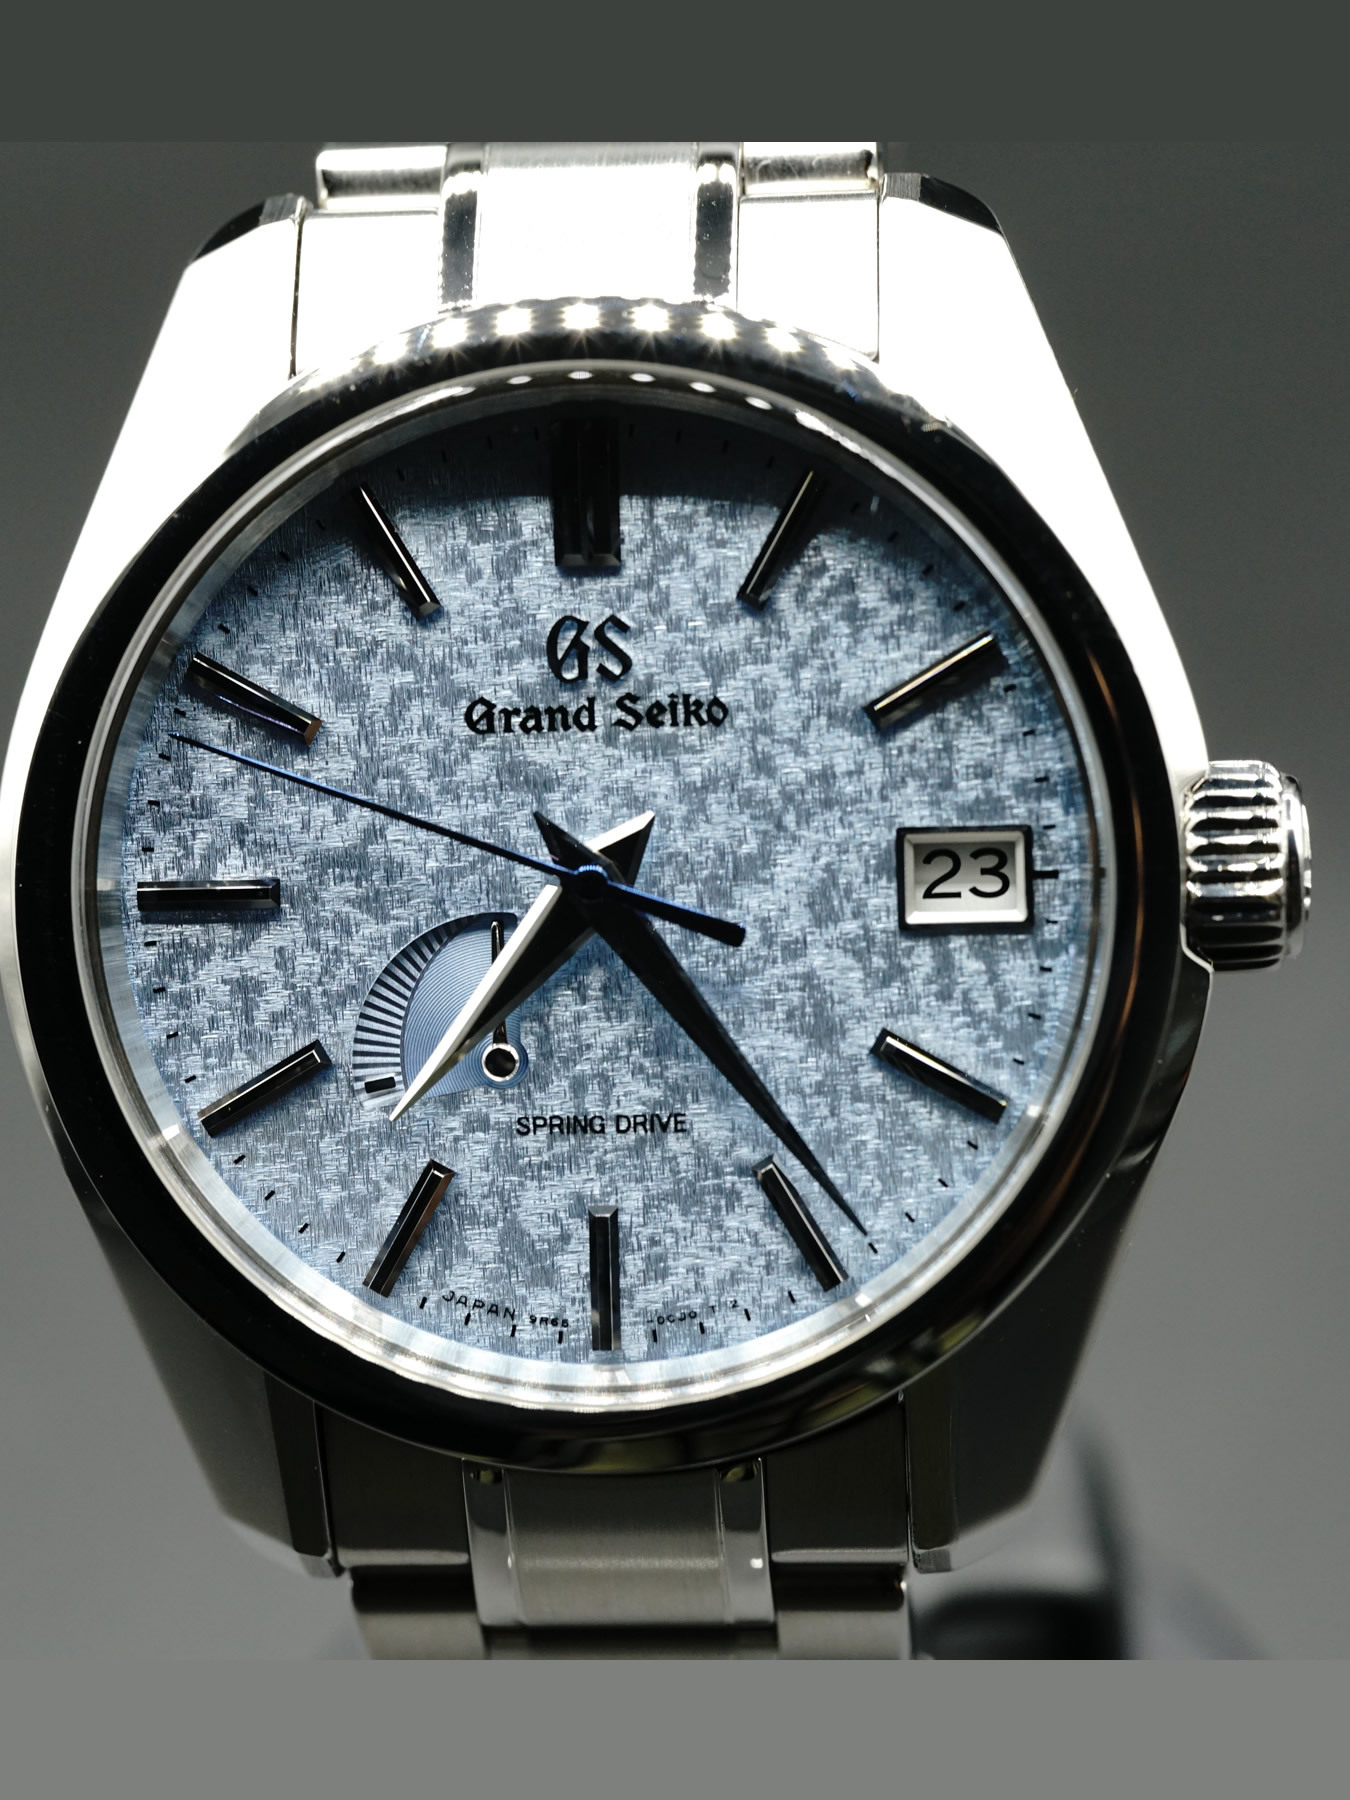 Grand Seiko Spring Drive Ice Blue Dial SBGA387 - Exquisite Timepieces:  Checkout